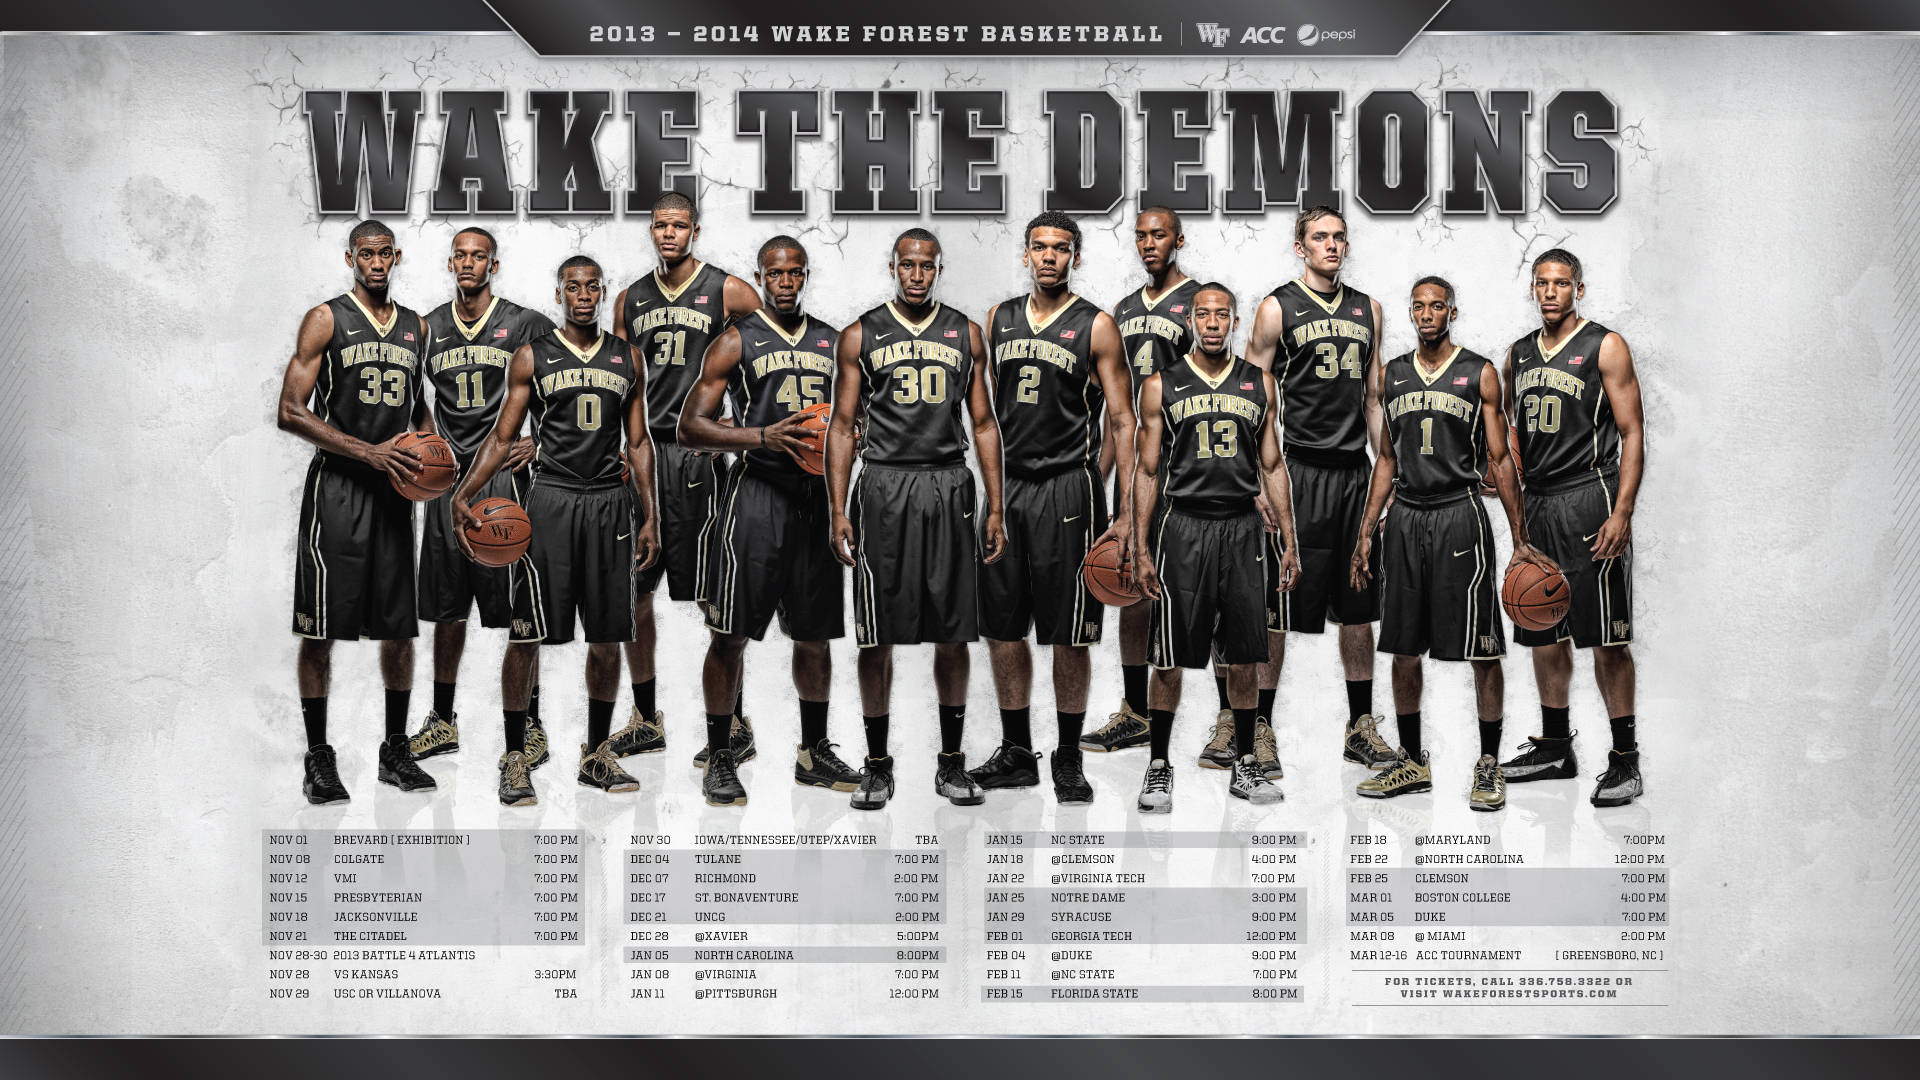 Wake Forest University Basketball Cool Poster Wallpaper